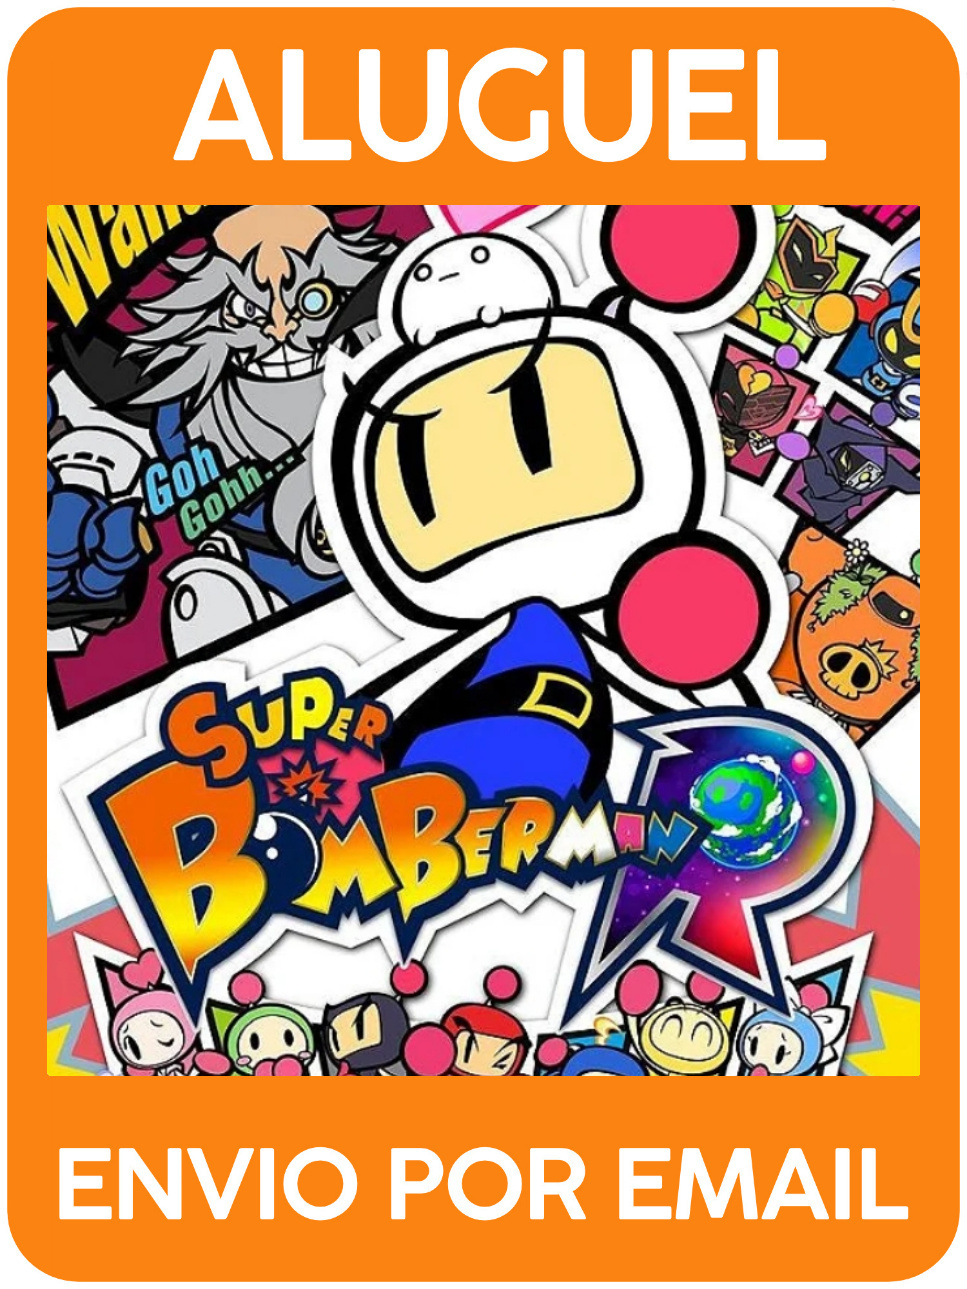 Super Bomberman R - Nintendo Switch